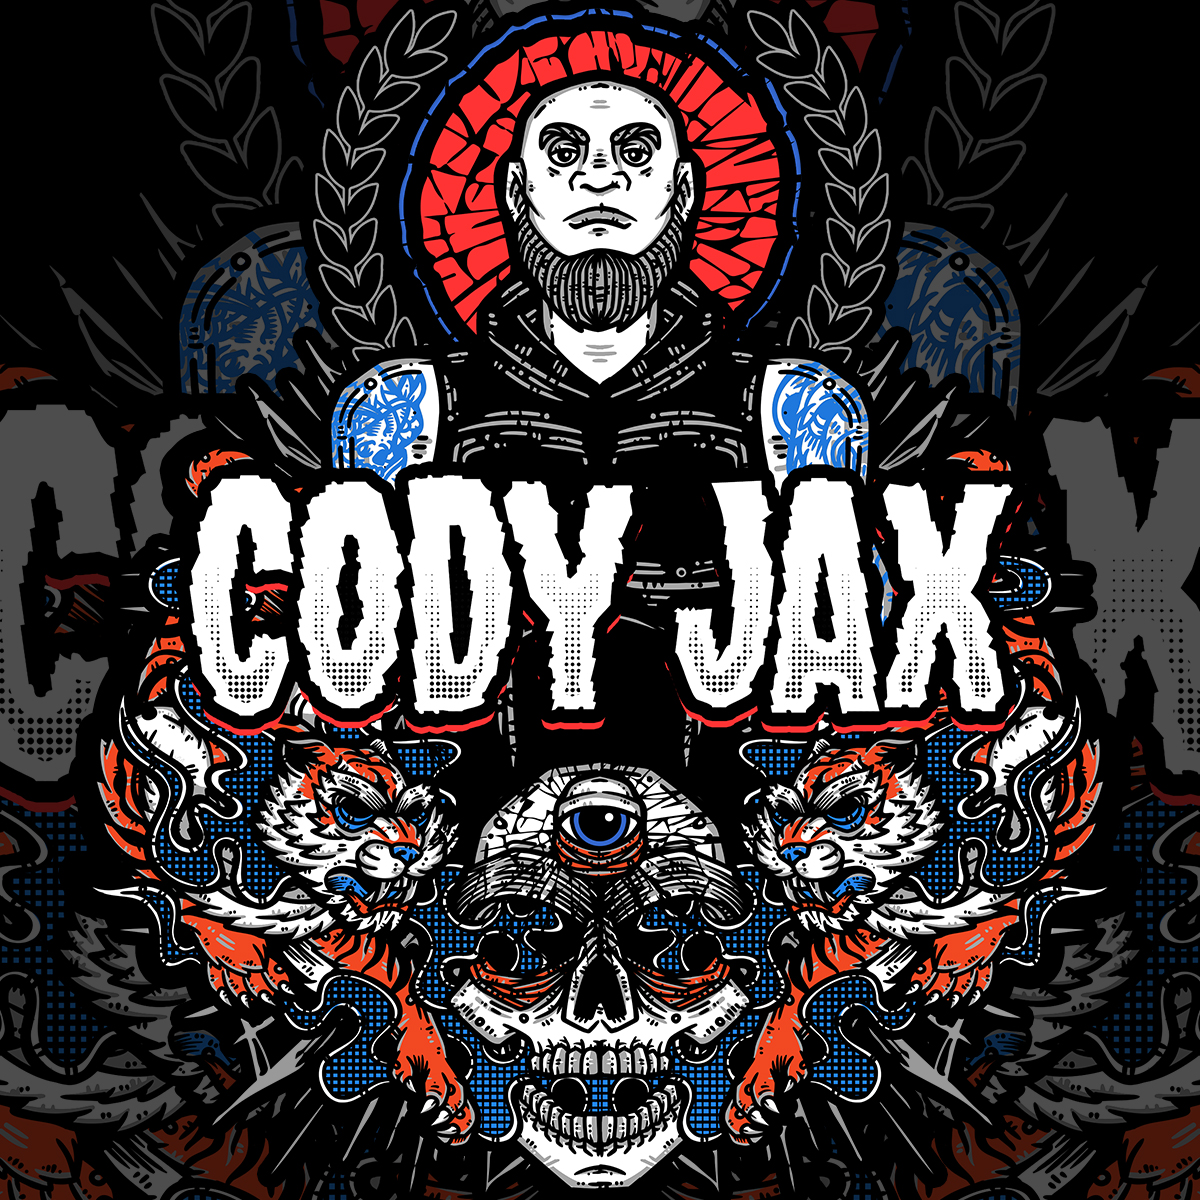 made this bad ass design for Georgia based Cody Jax

#wwebacklash #wwe #wweple #kevinowens #jacobfatu #tamatonga #rko #CodyRhodes #indywrestling #indywrestler #cartoonist #freelanceartist #wrestlingmerch